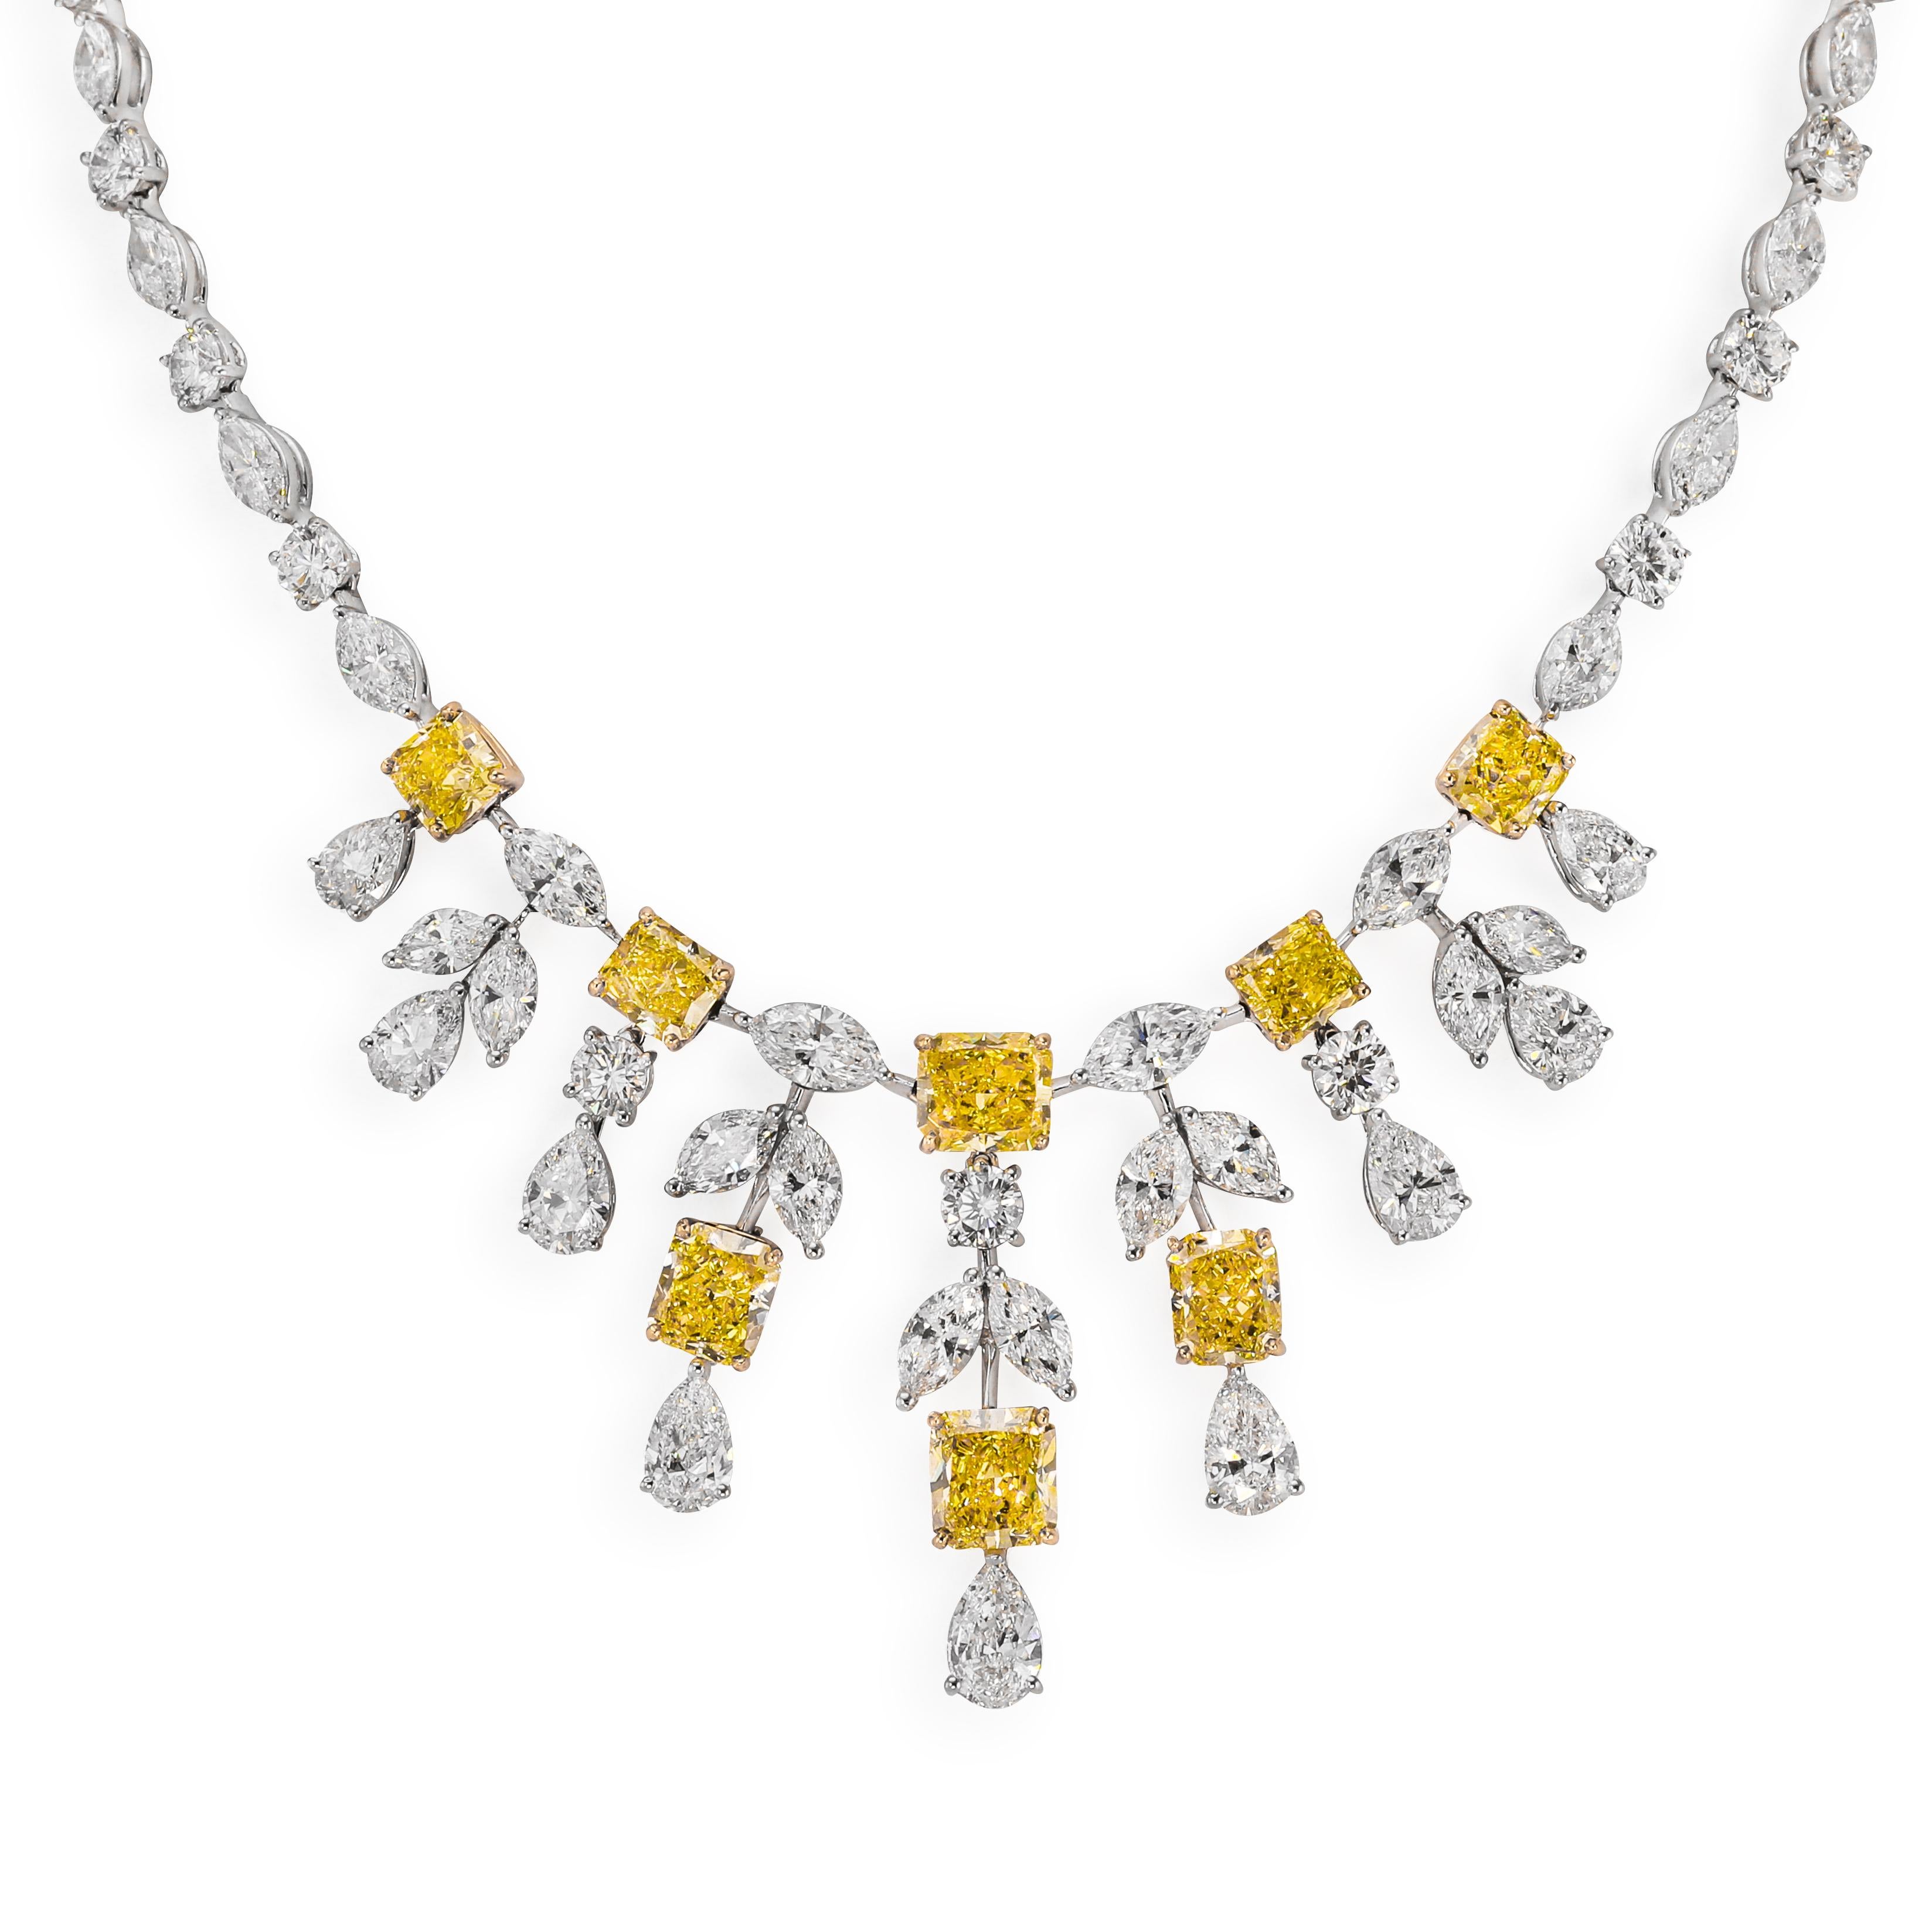 Natural Fancy Intense Yellow Diamonds (14.31 ctw.VS1-SI2) GIA
Marquise, Round Brilliant, Pear Shape Diamonds (32.60 ctw.)
Platinum/18K yellow gold